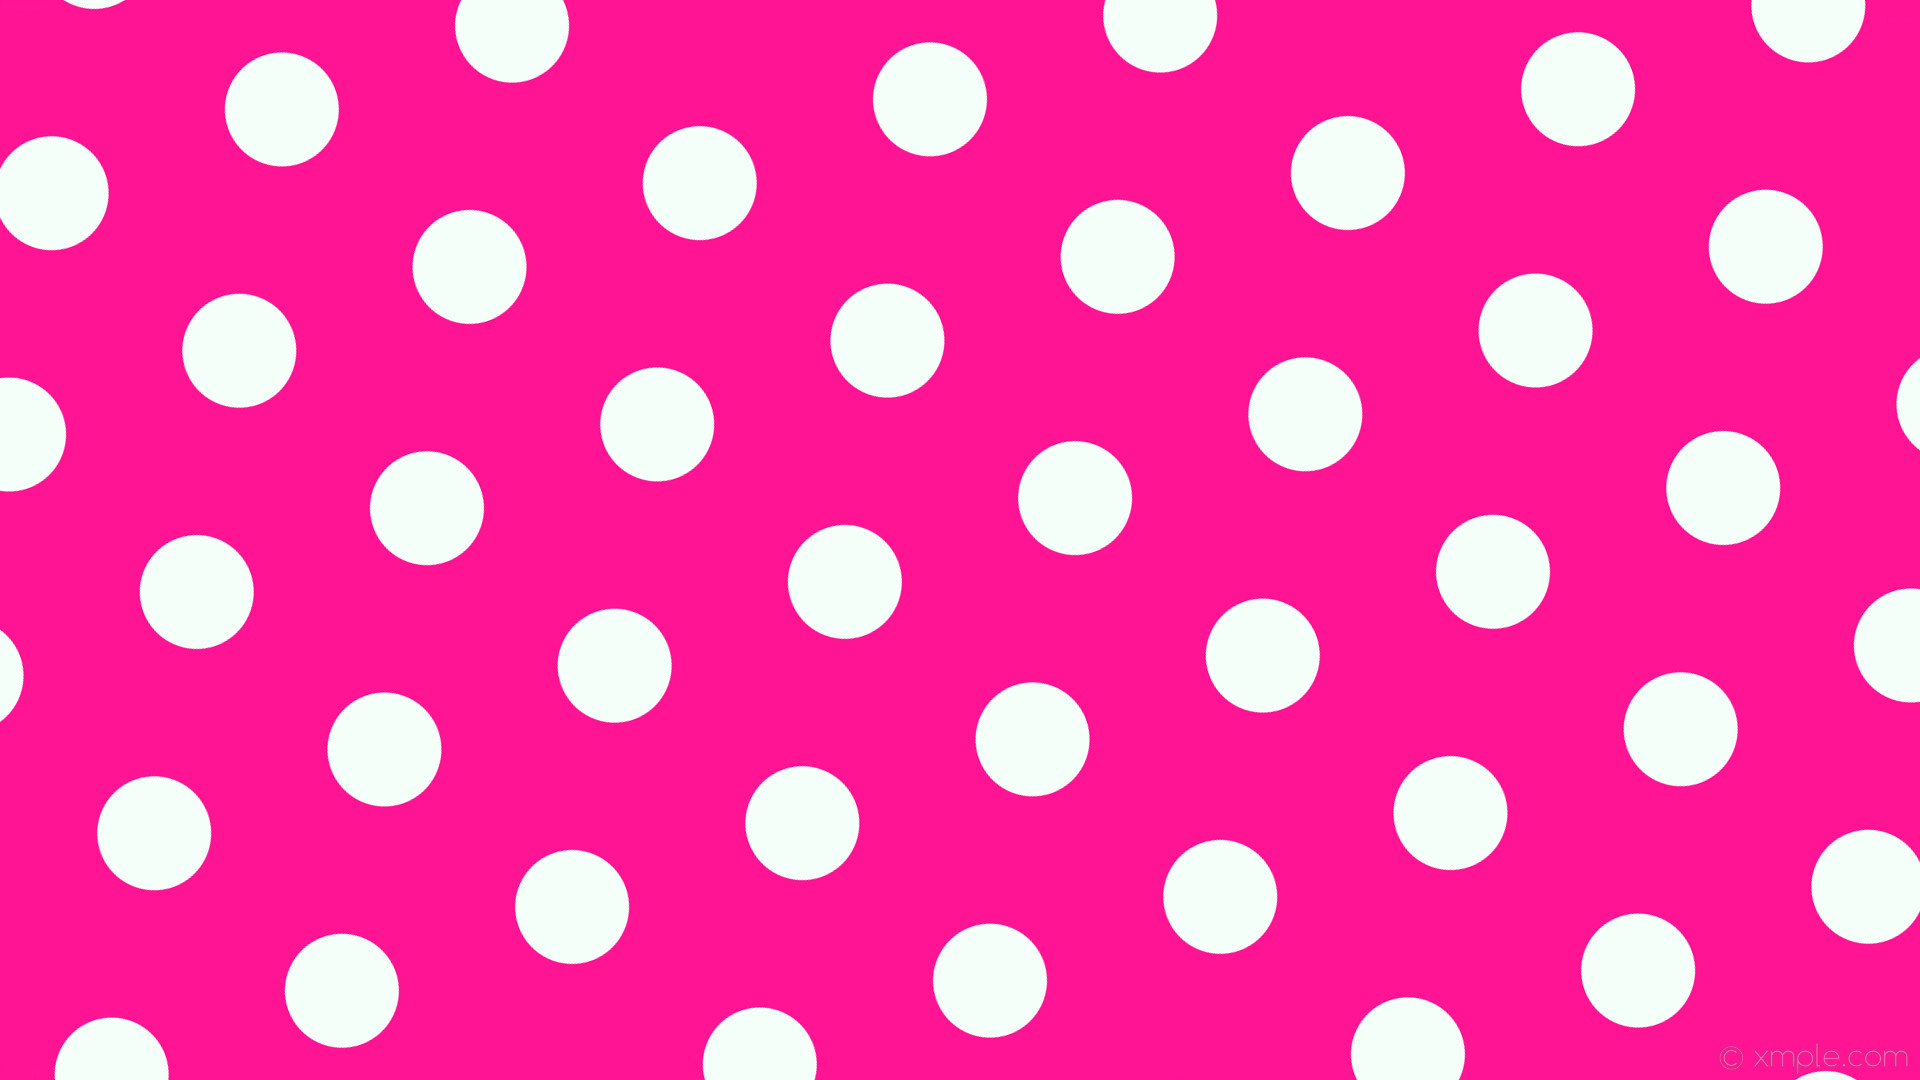 wallpaper hexagon pink polka dots white deep pink mint cream #ff1493  #f5fffa diagonal 20